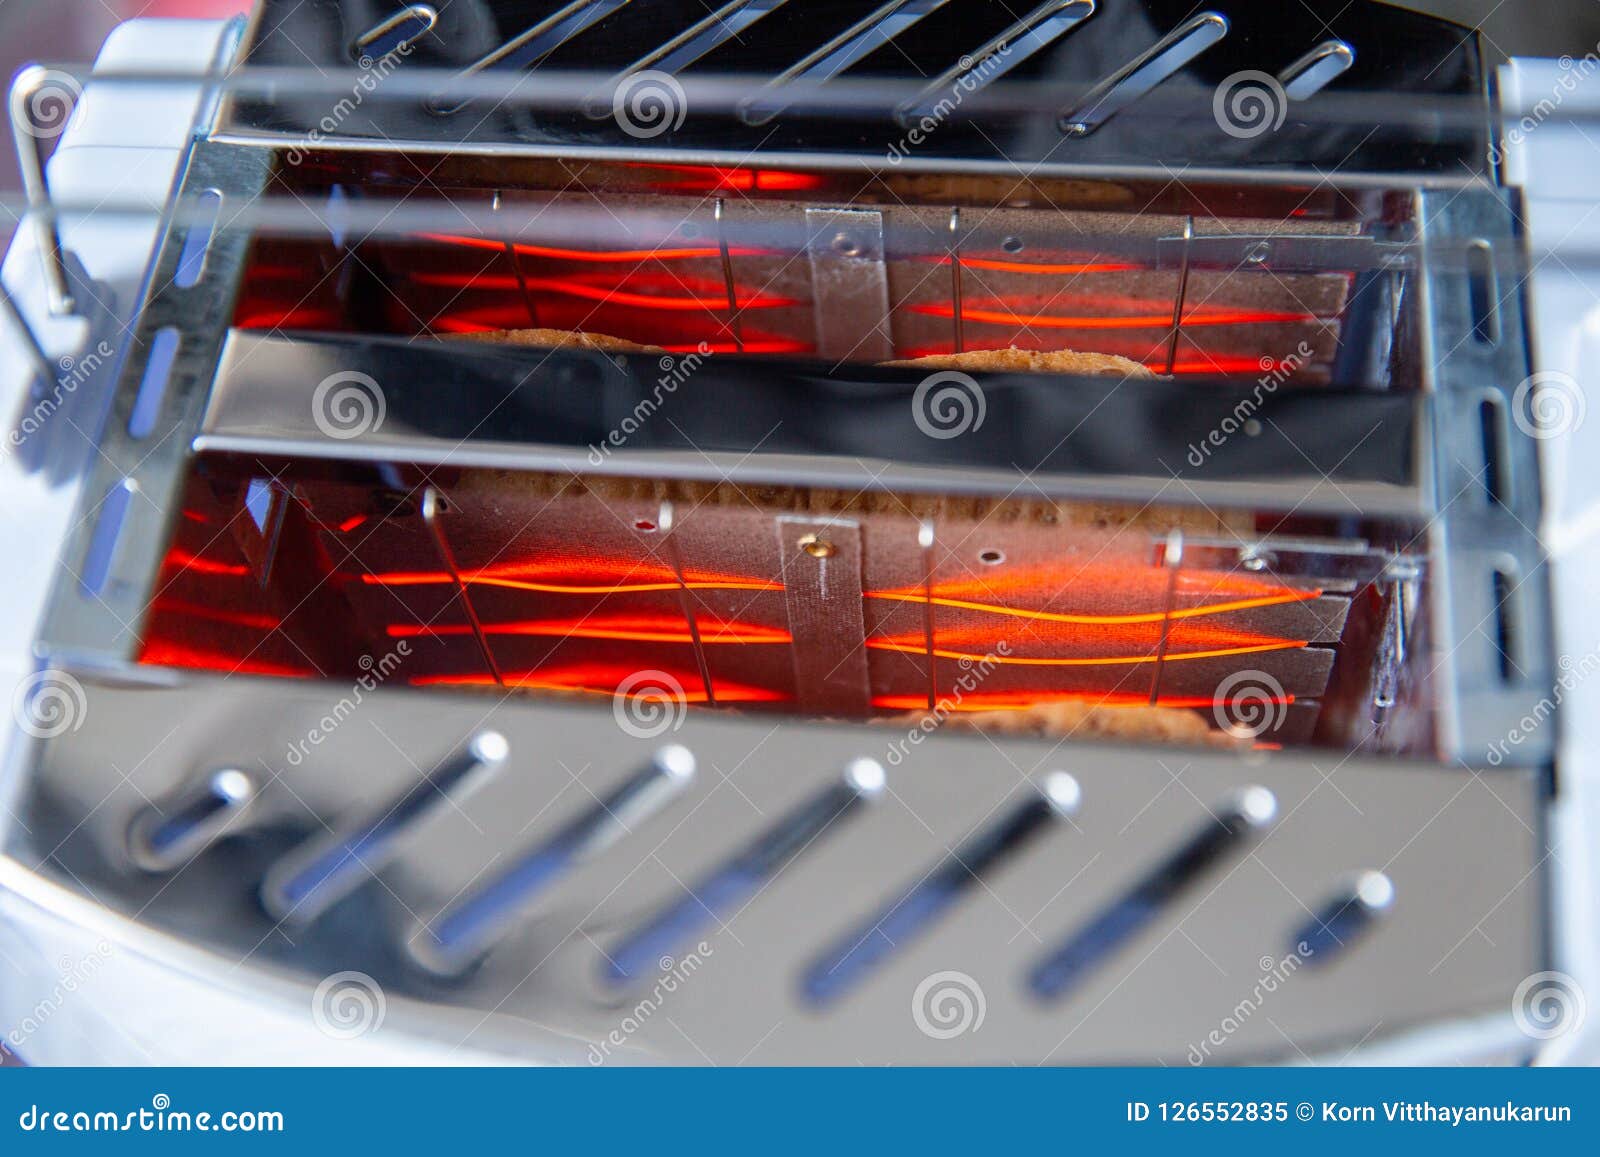 closeup inside bread toaster heating 